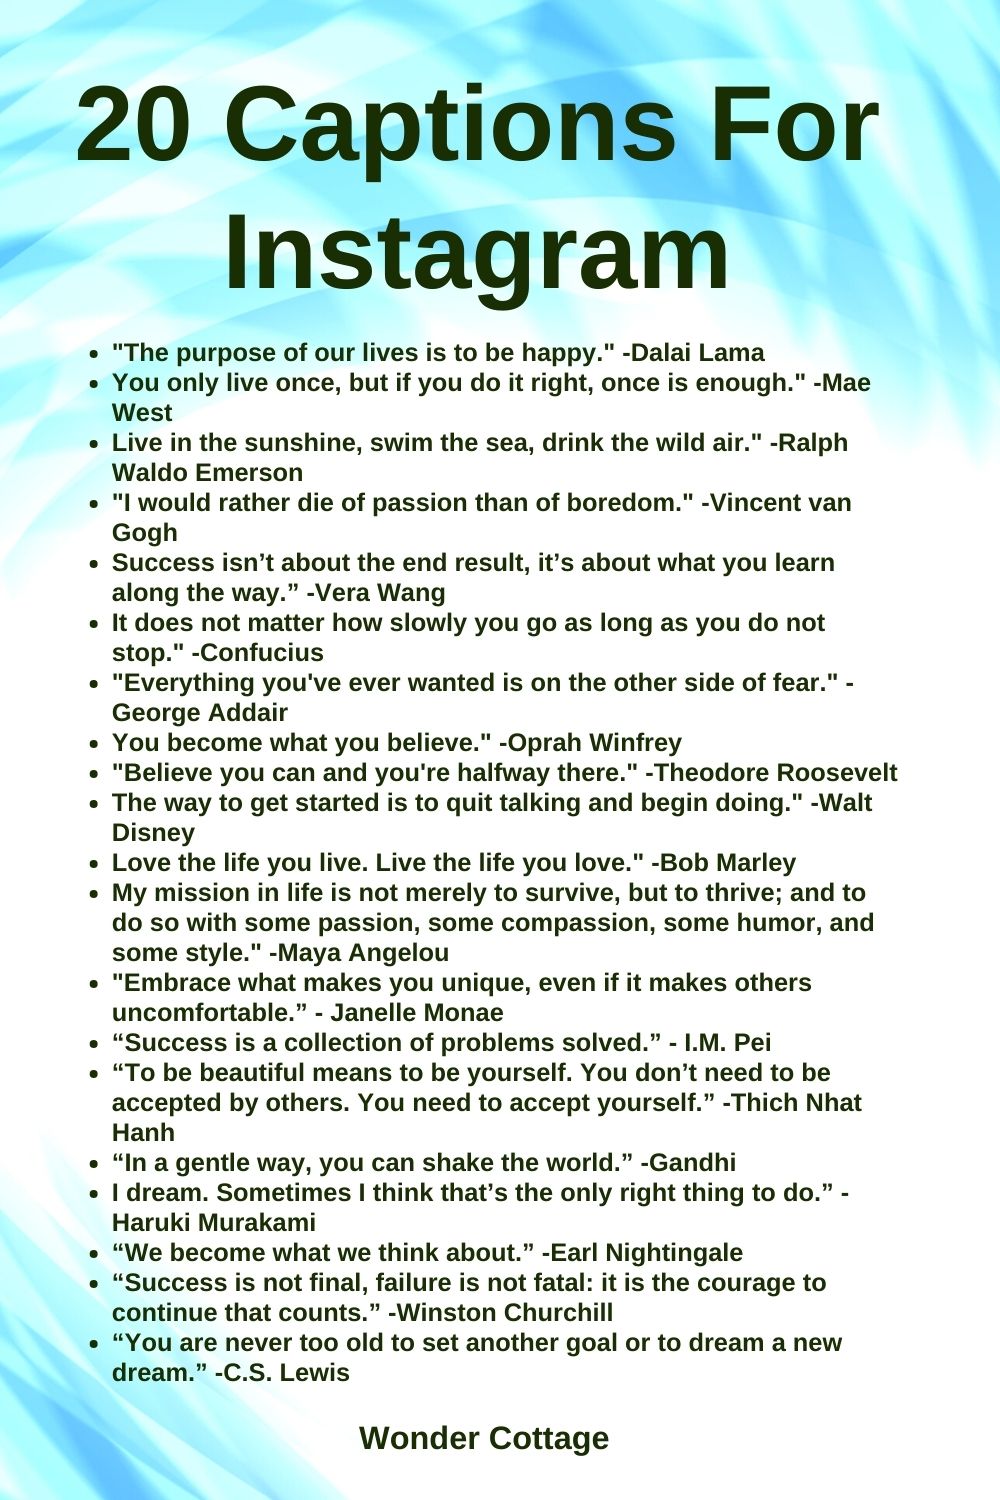 20 Captions For Instagram